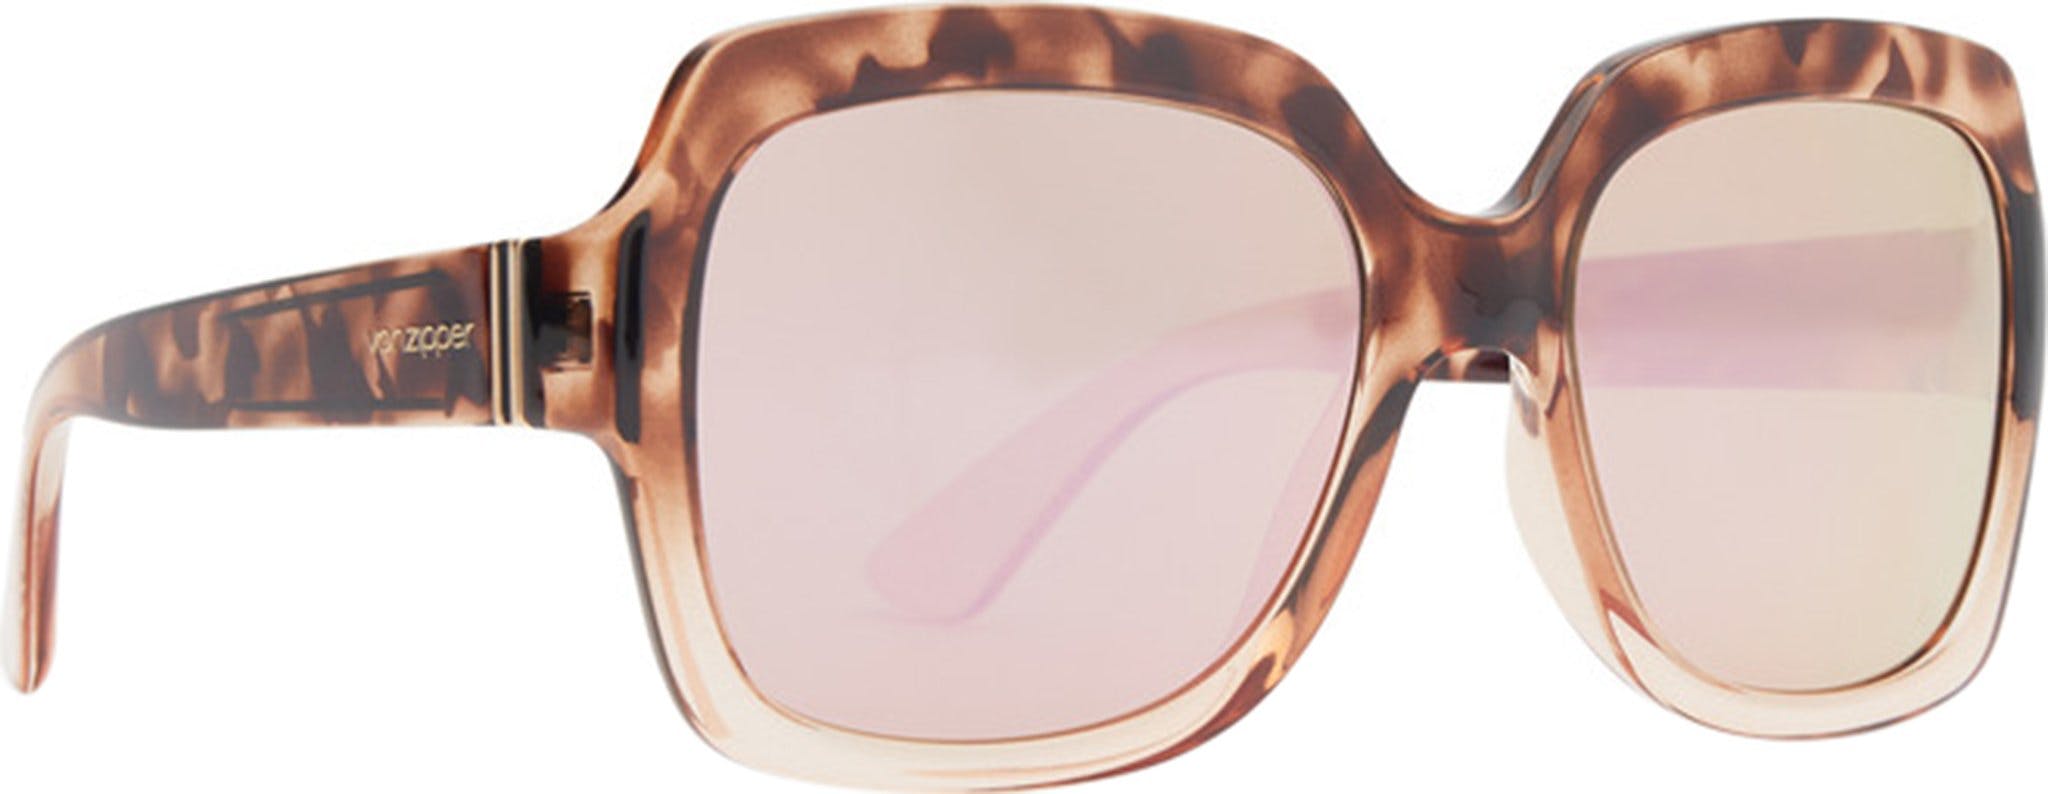 Product image for Dolls Chrome Sunglasses - Unisex